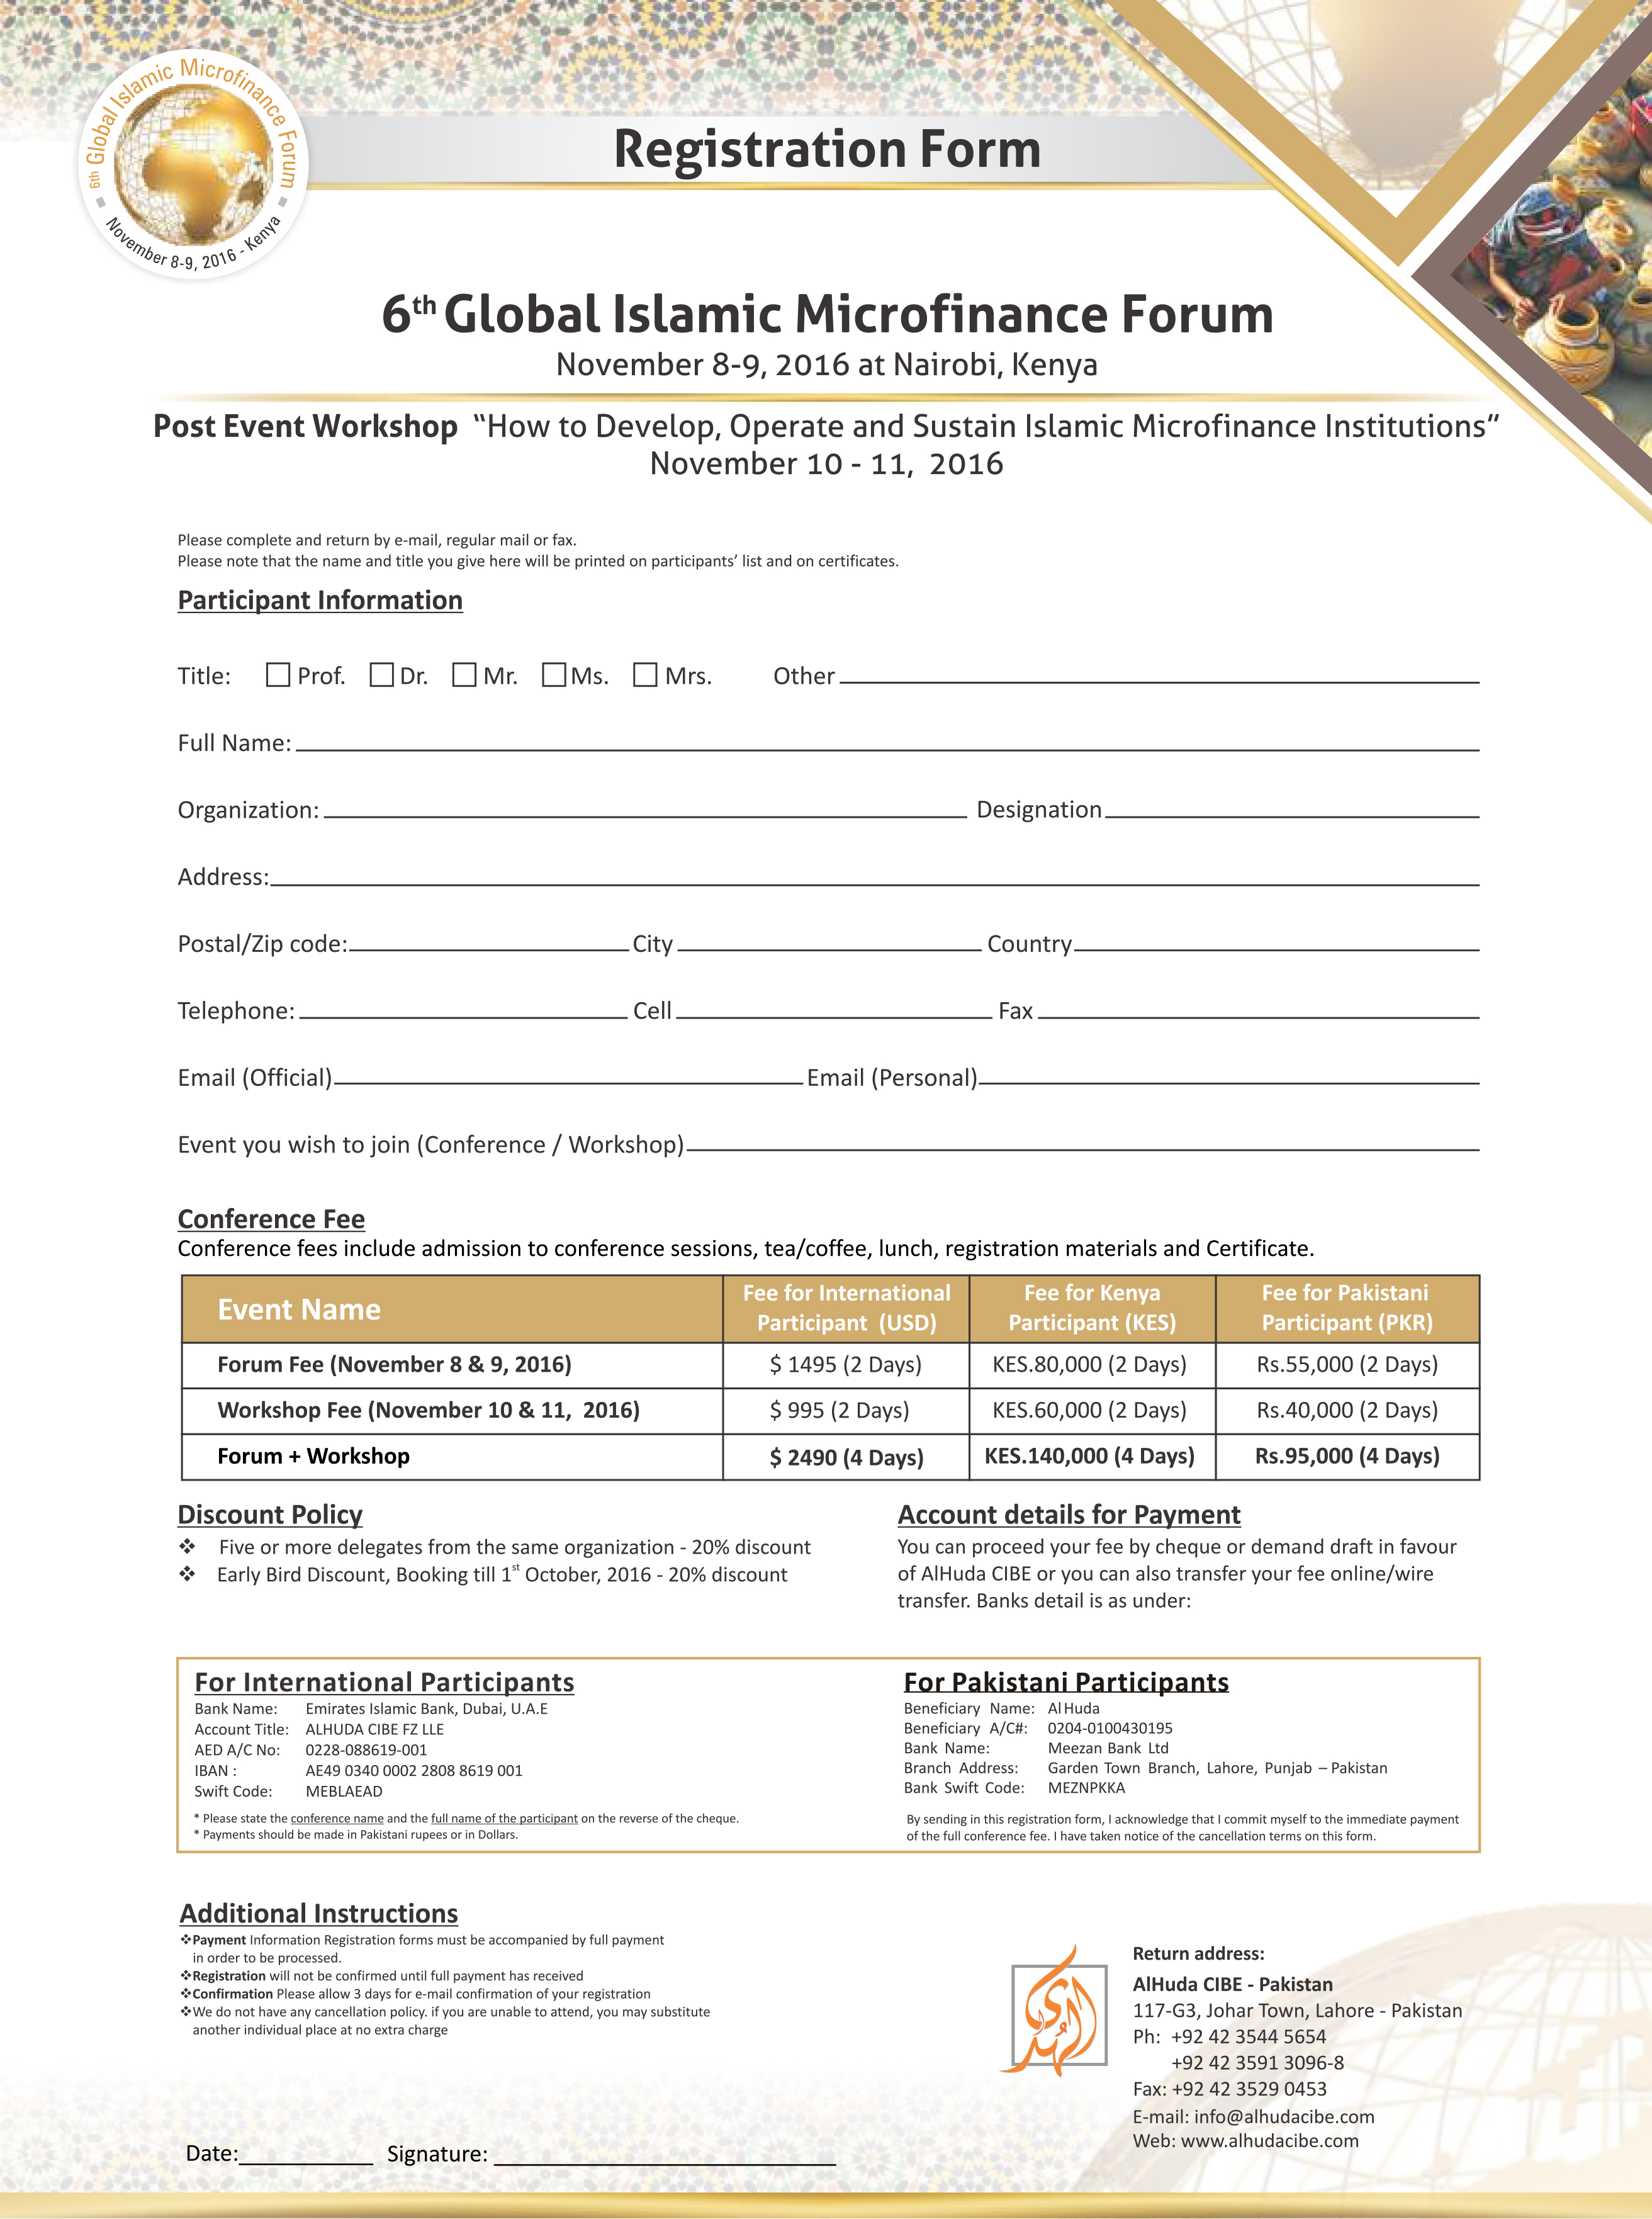 6th Global Islamic Microfinance Forum Registration Form